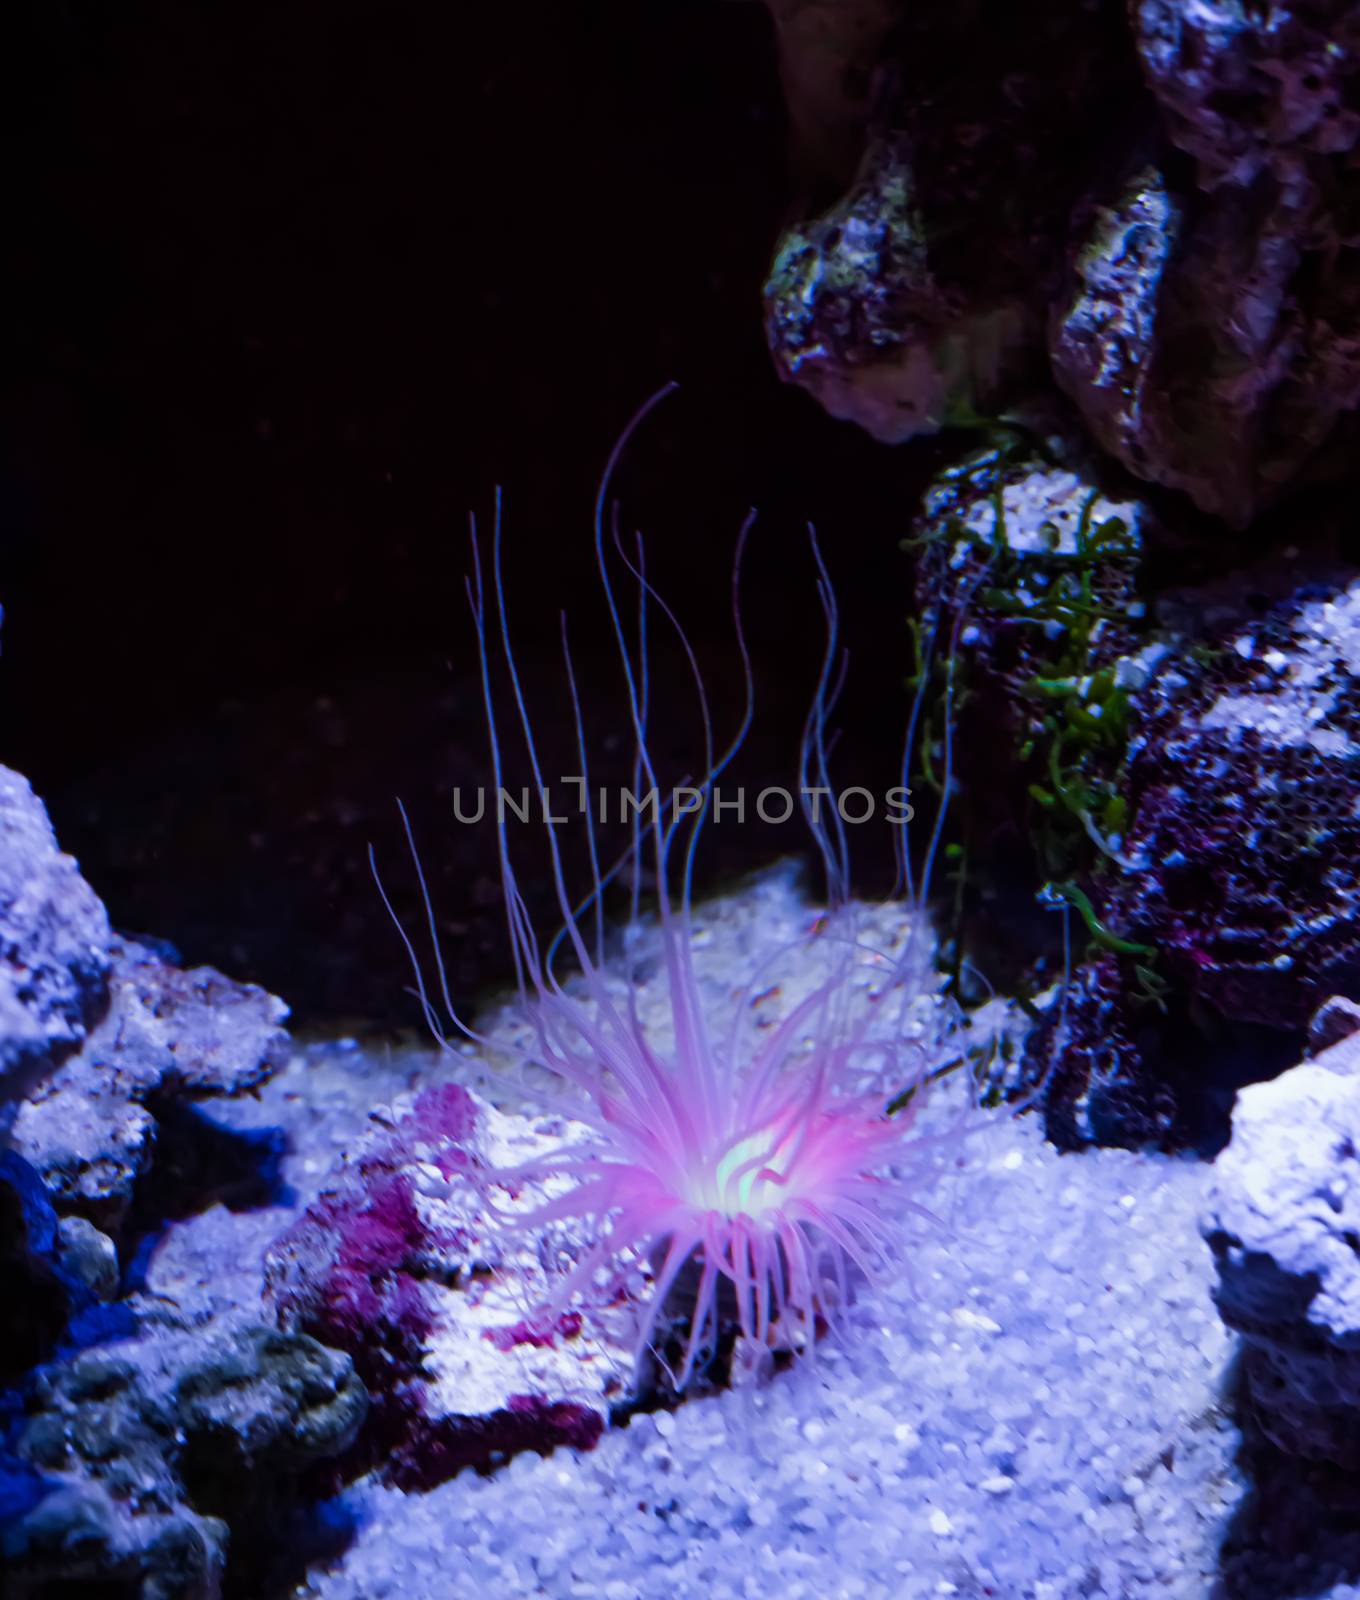 beautiful sea anemone animal plant shining purple pink light fairytale like aquatic underwater ocean landscape by charlottebleijenberg